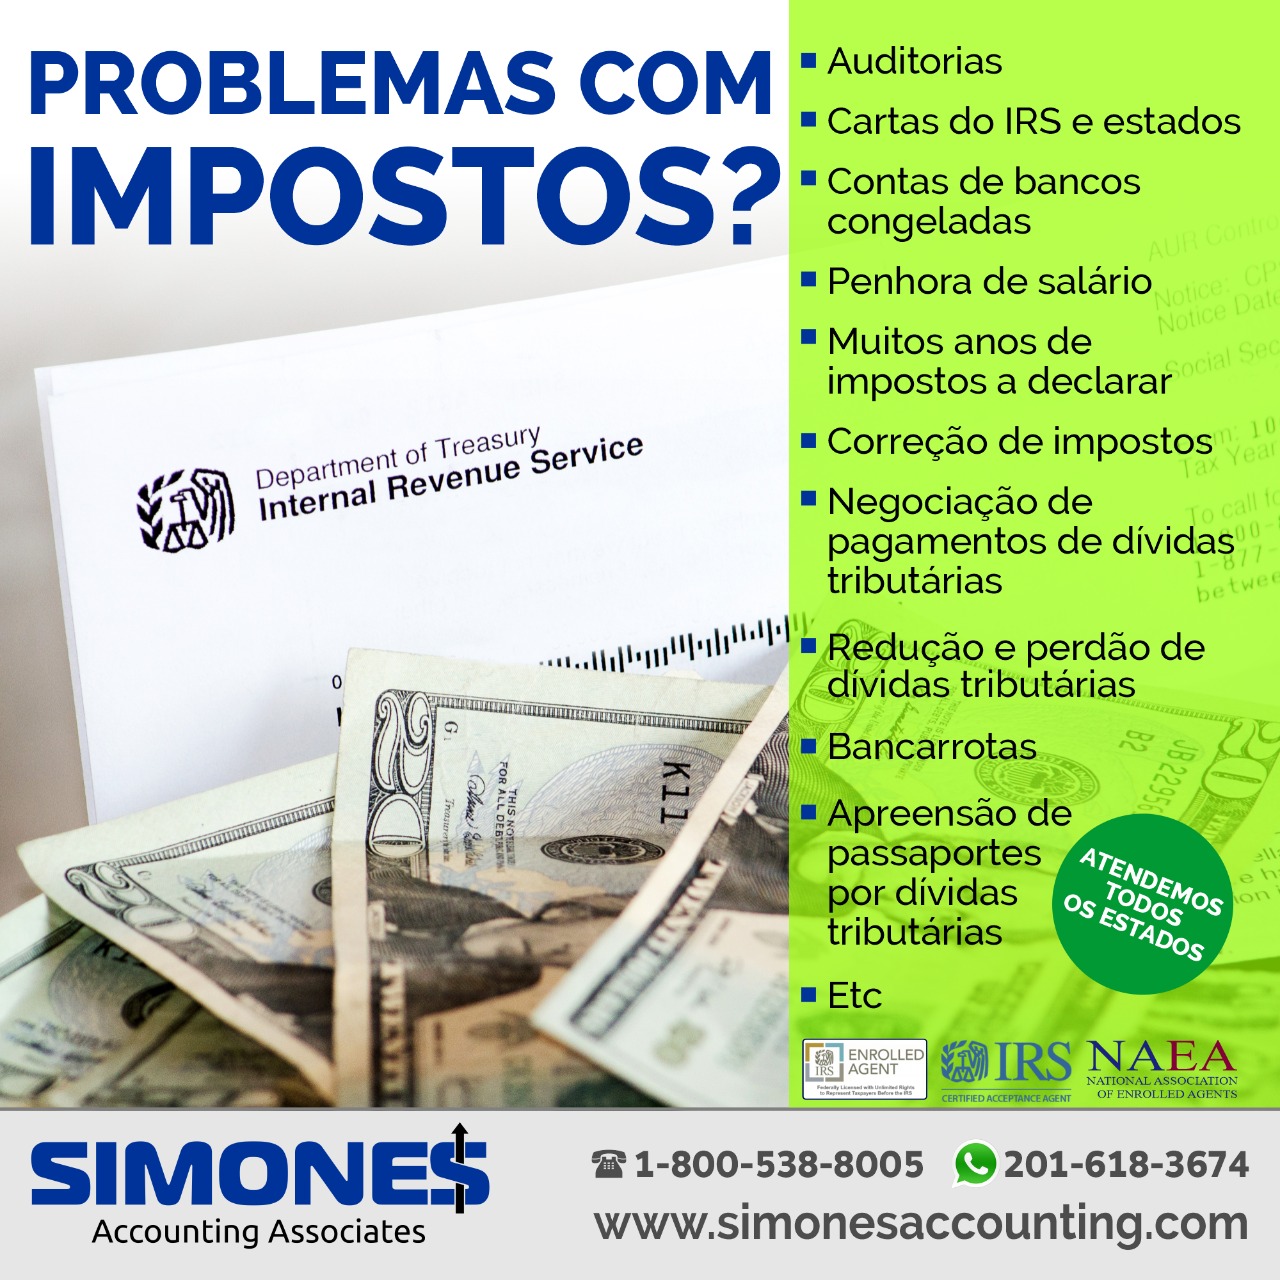 SIMONES Accounting Associates